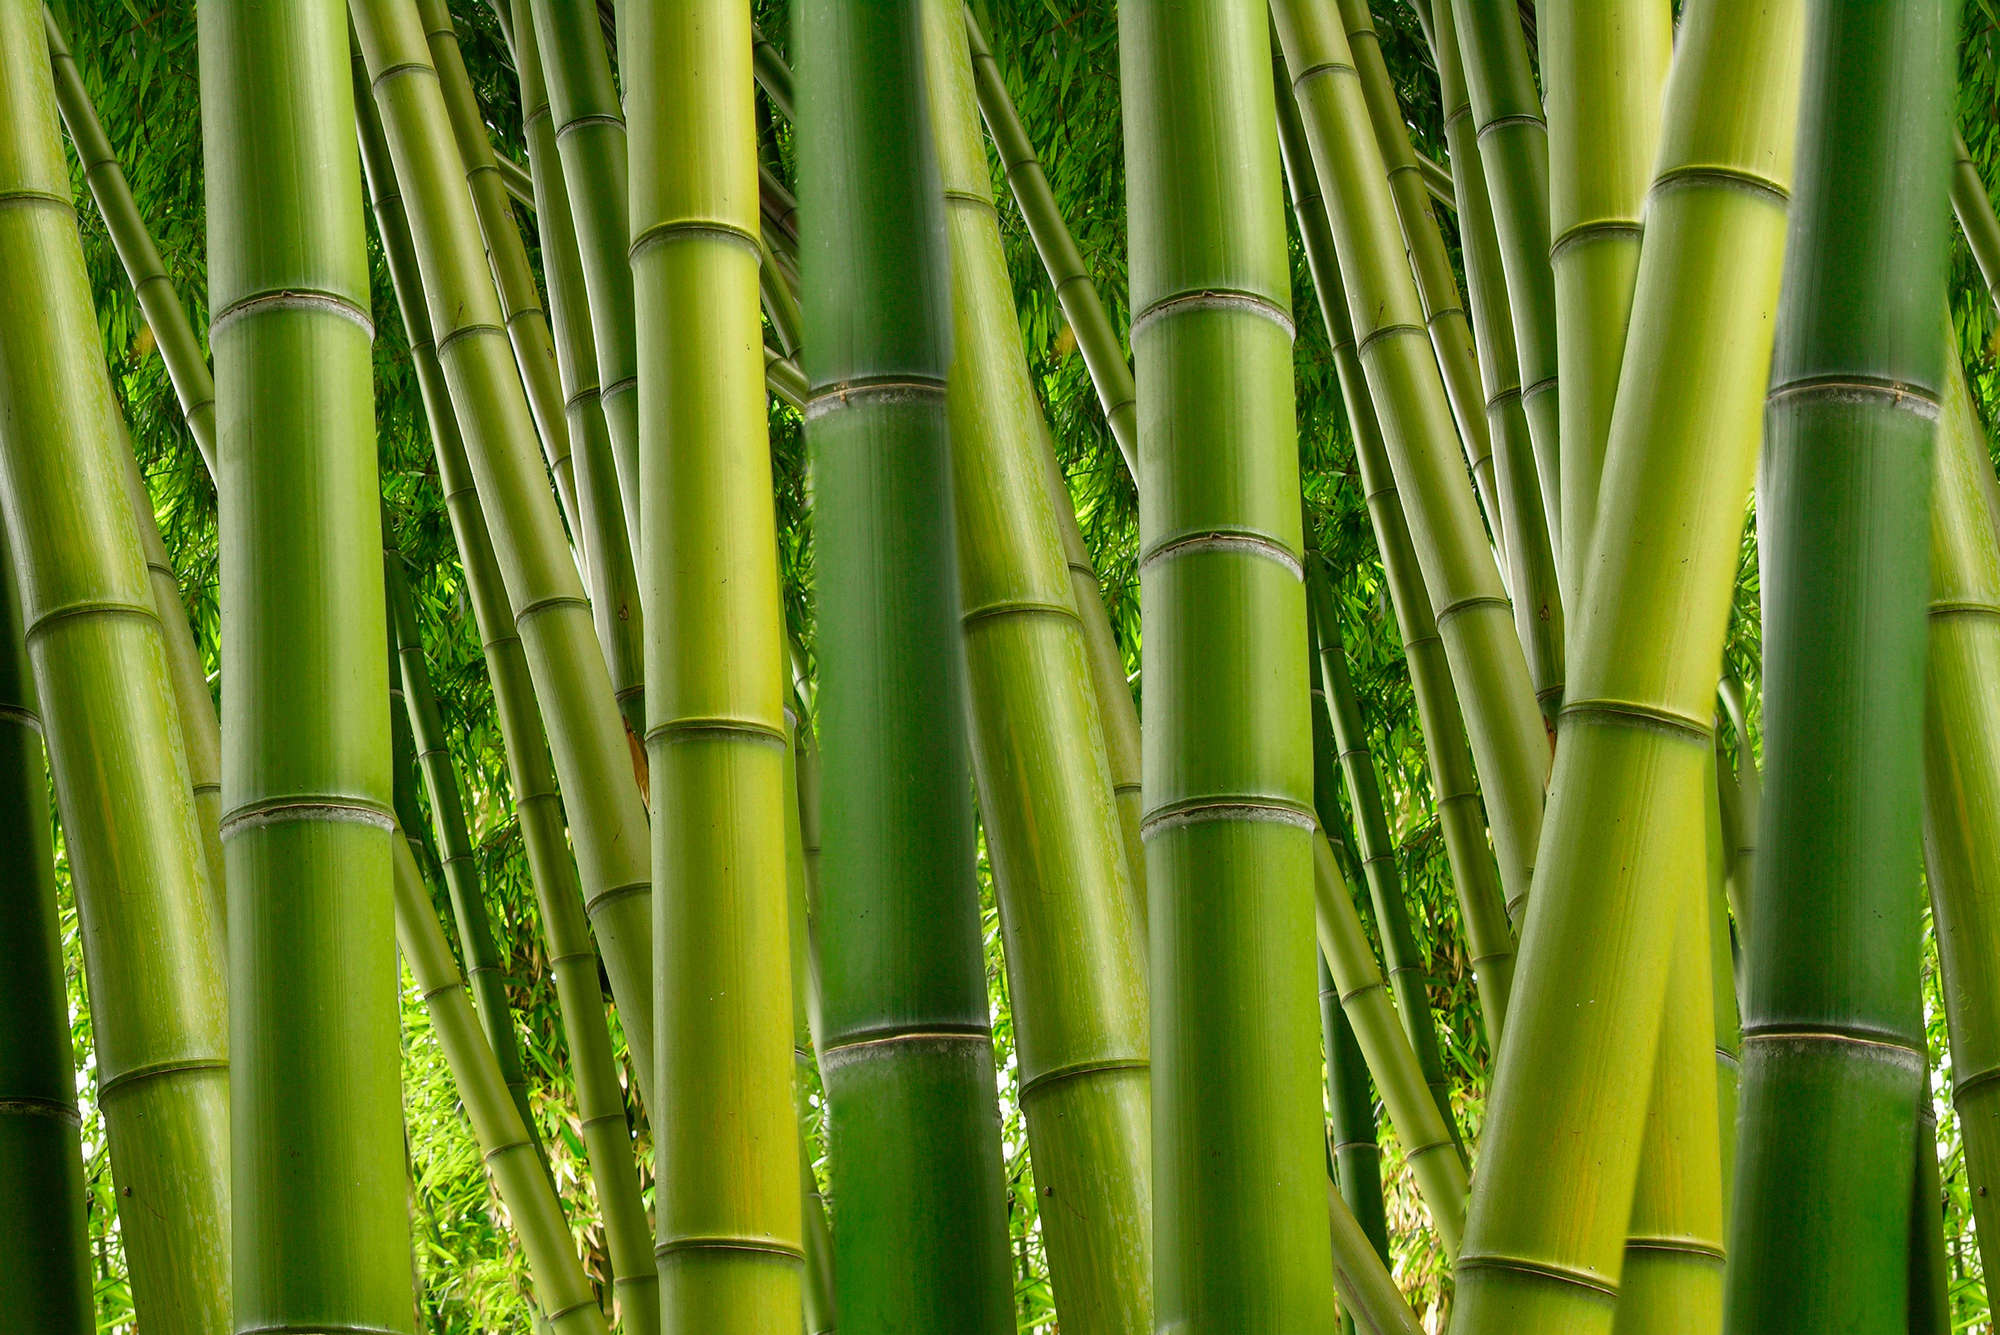             Natur Fototapete Bambuswald Motiv auf Strukturvlies
        